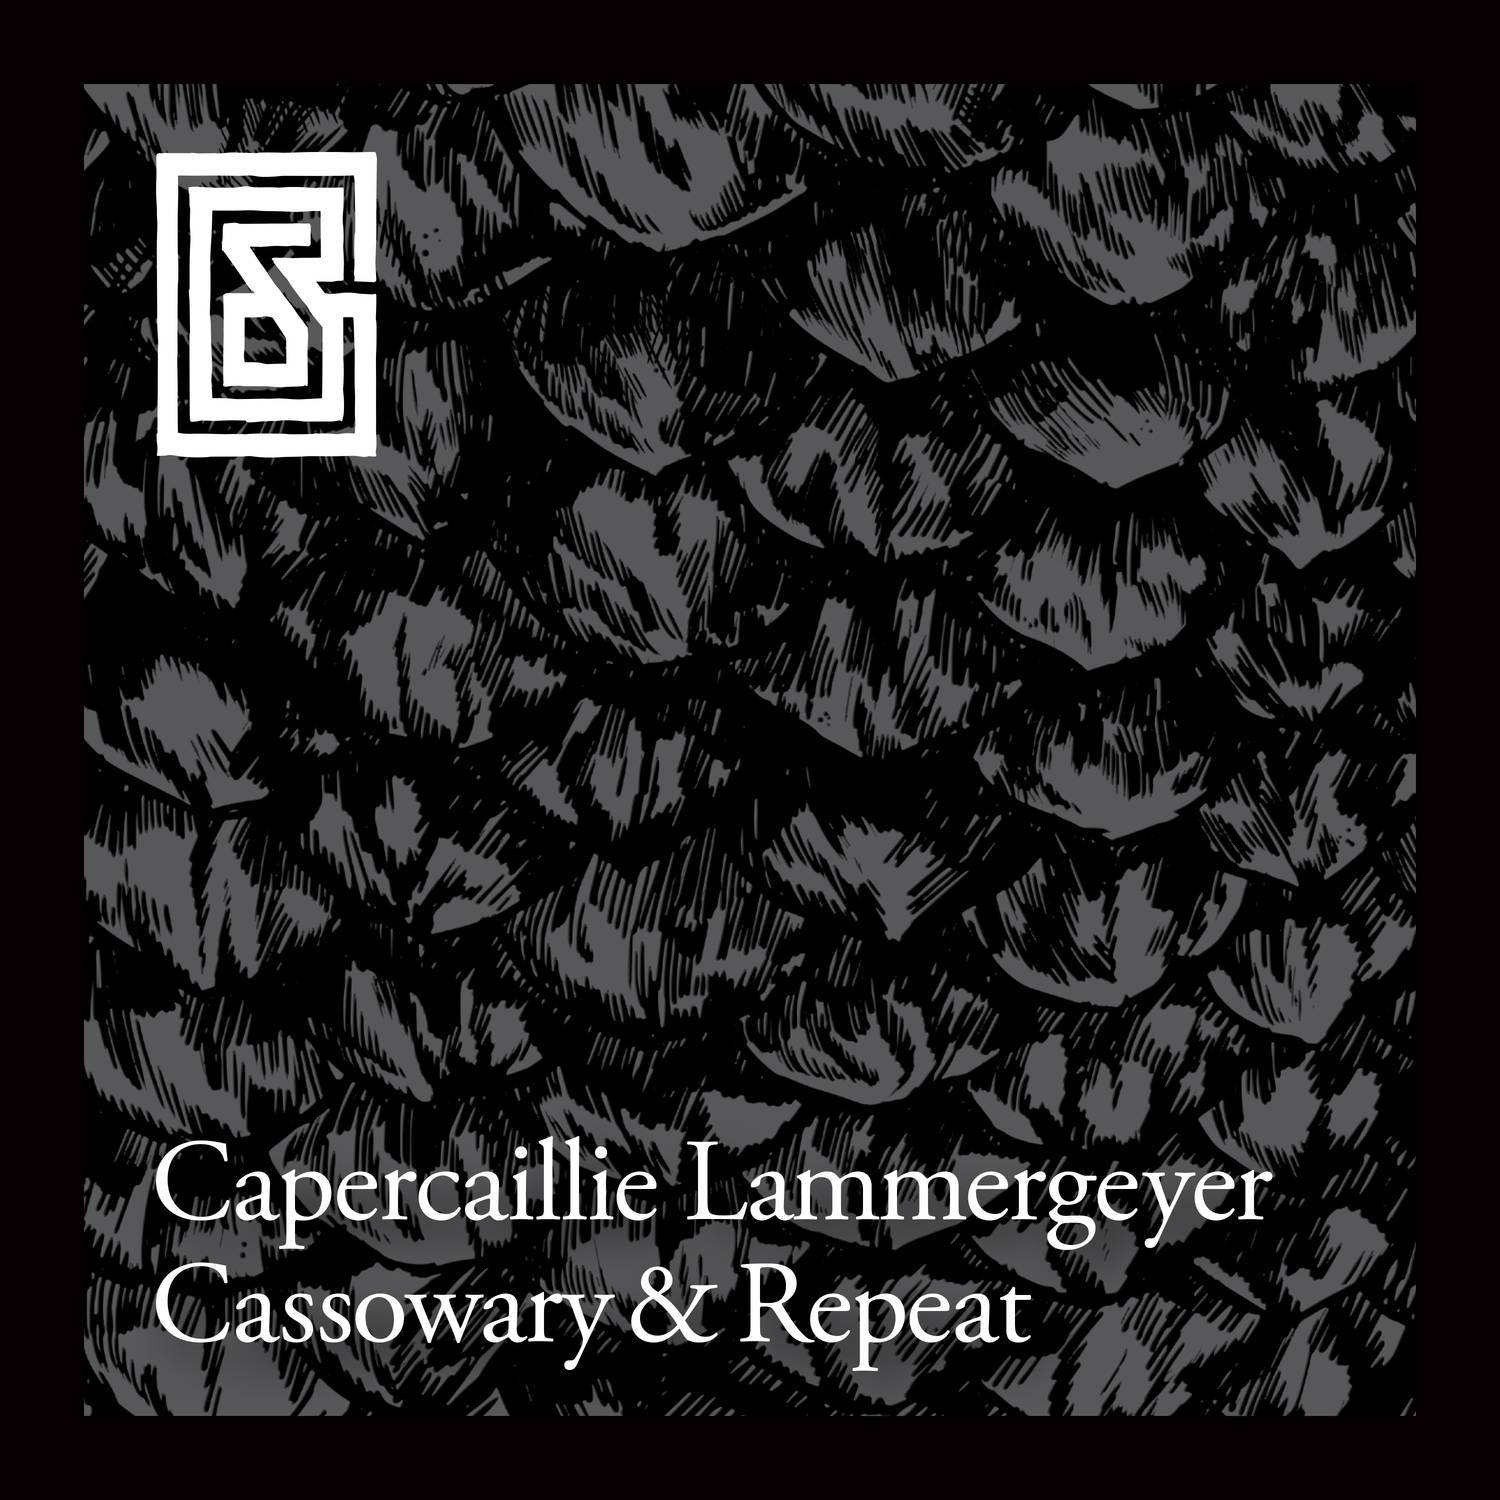 Capercaillie Lammergeyer Cassowary & Repeat